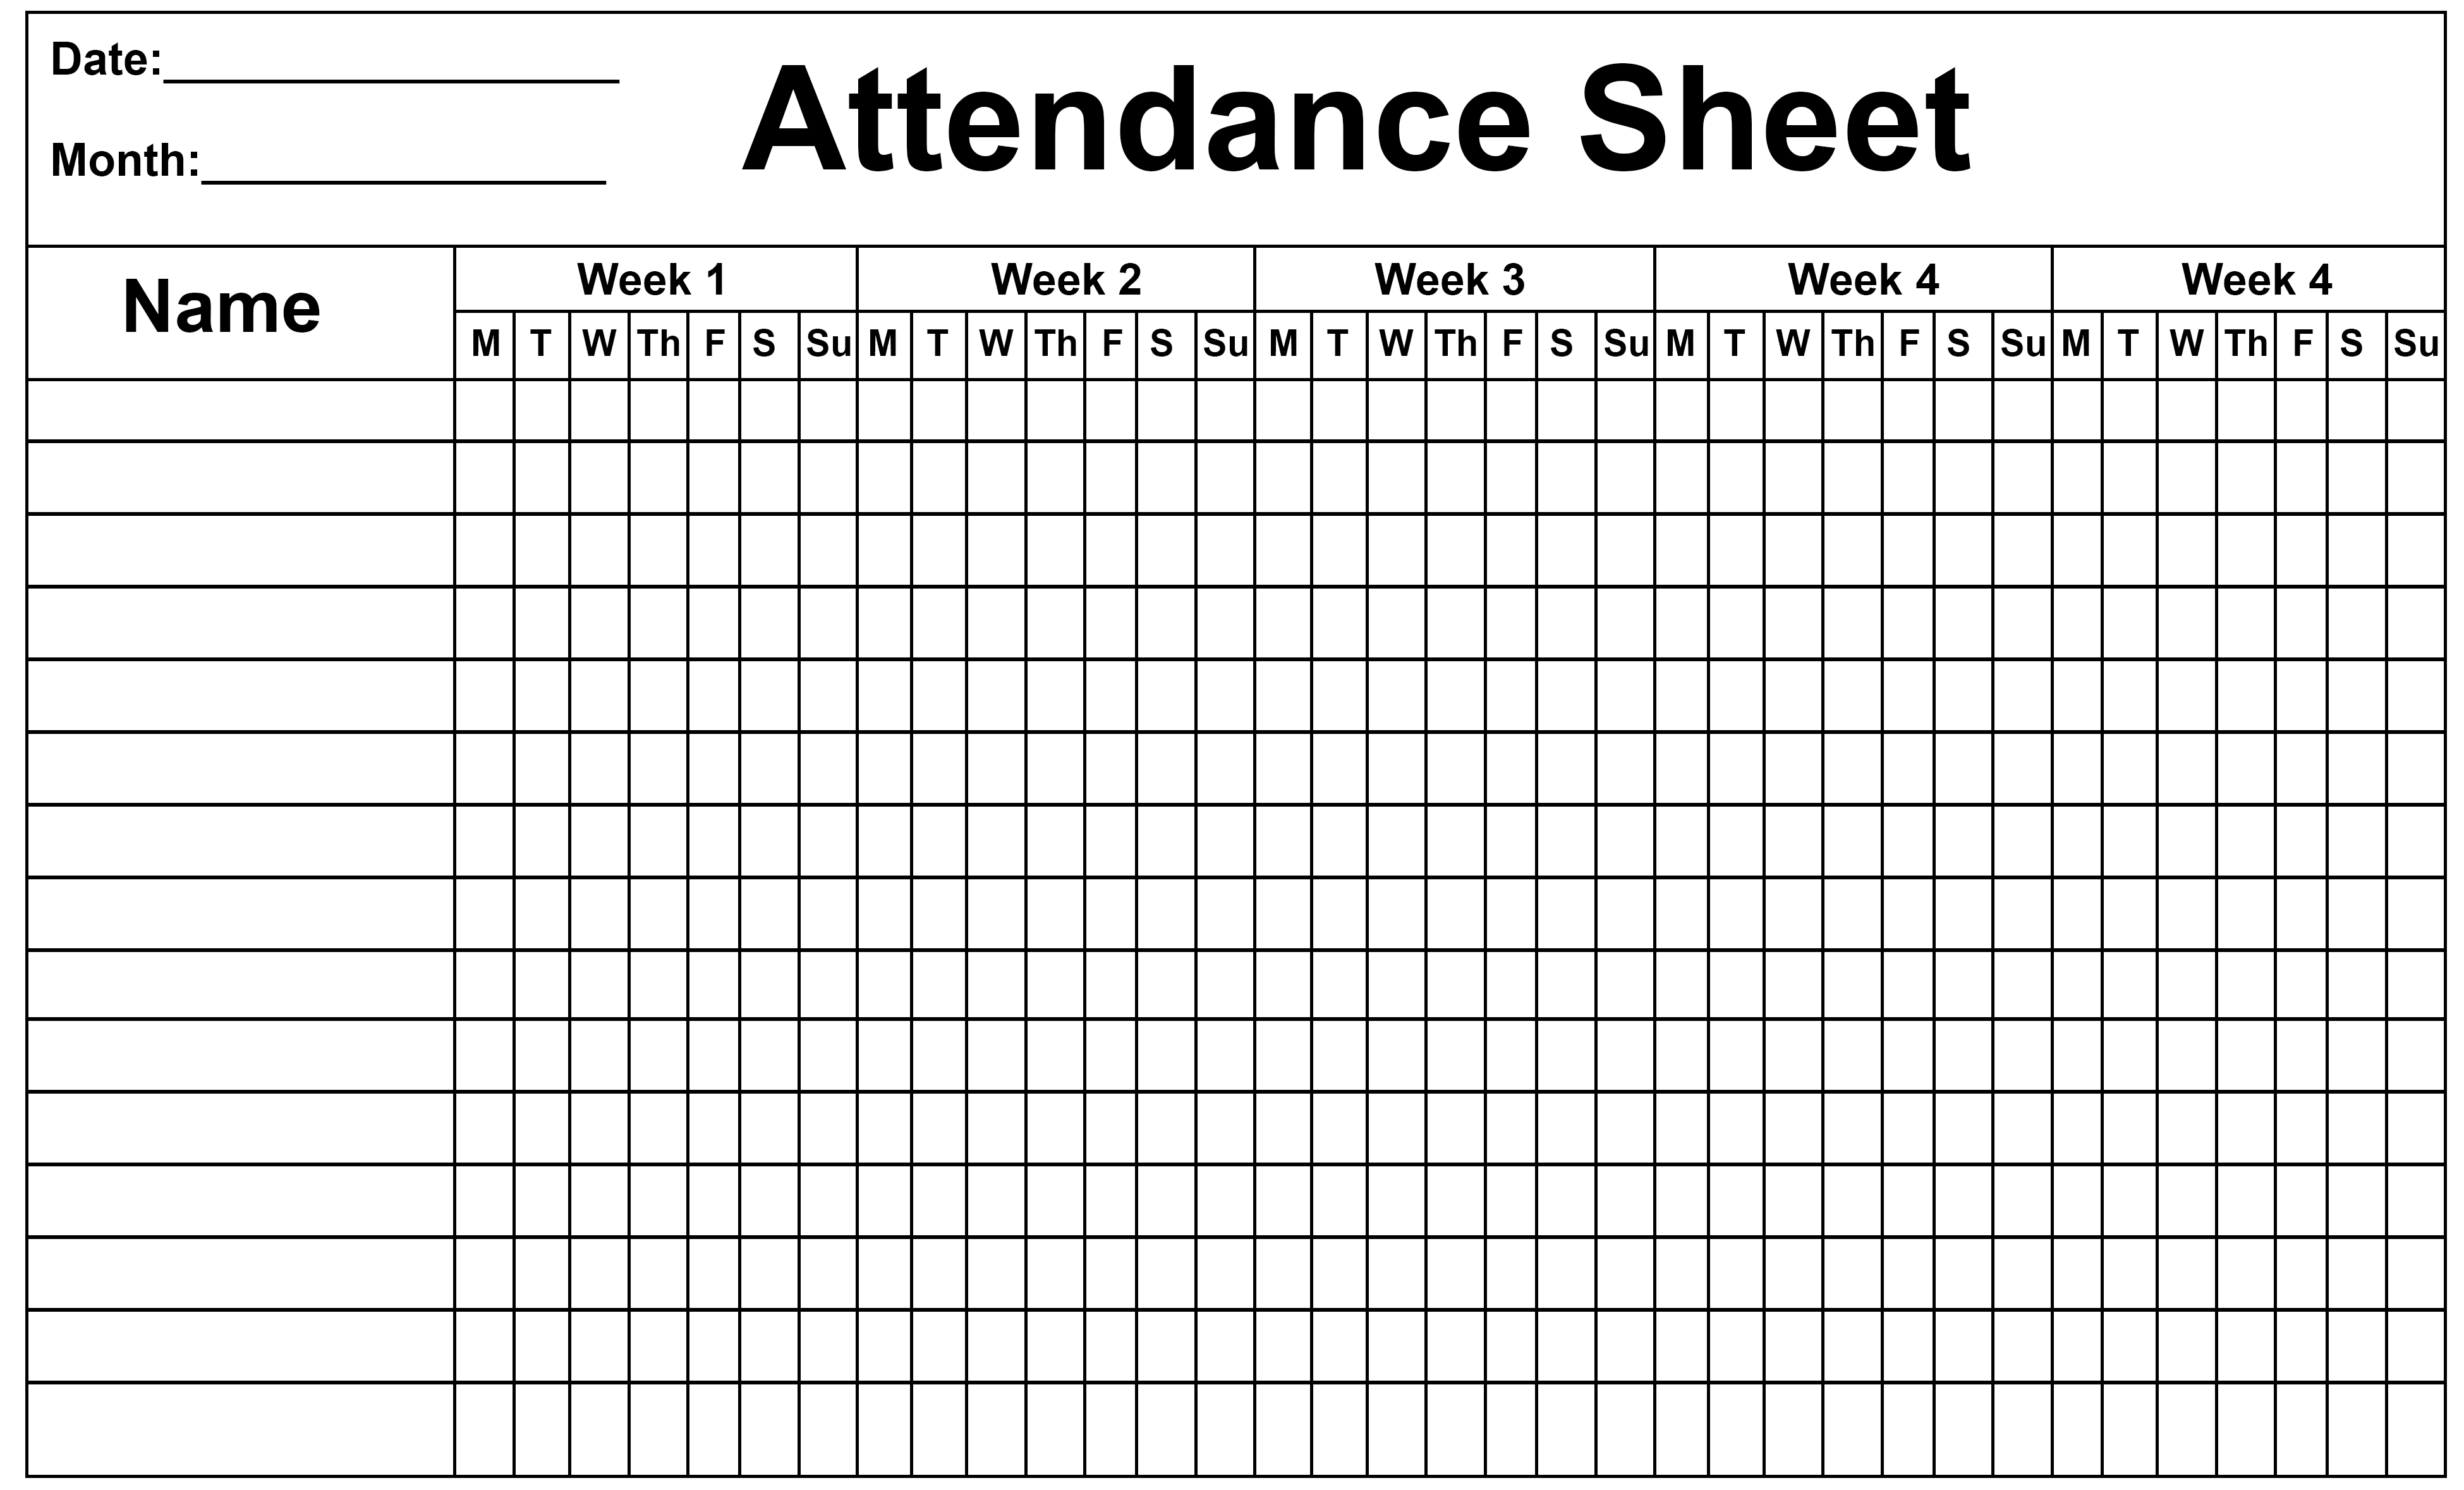 2021 Employee Attendance Sheet Calendar Tracker Template in PDF